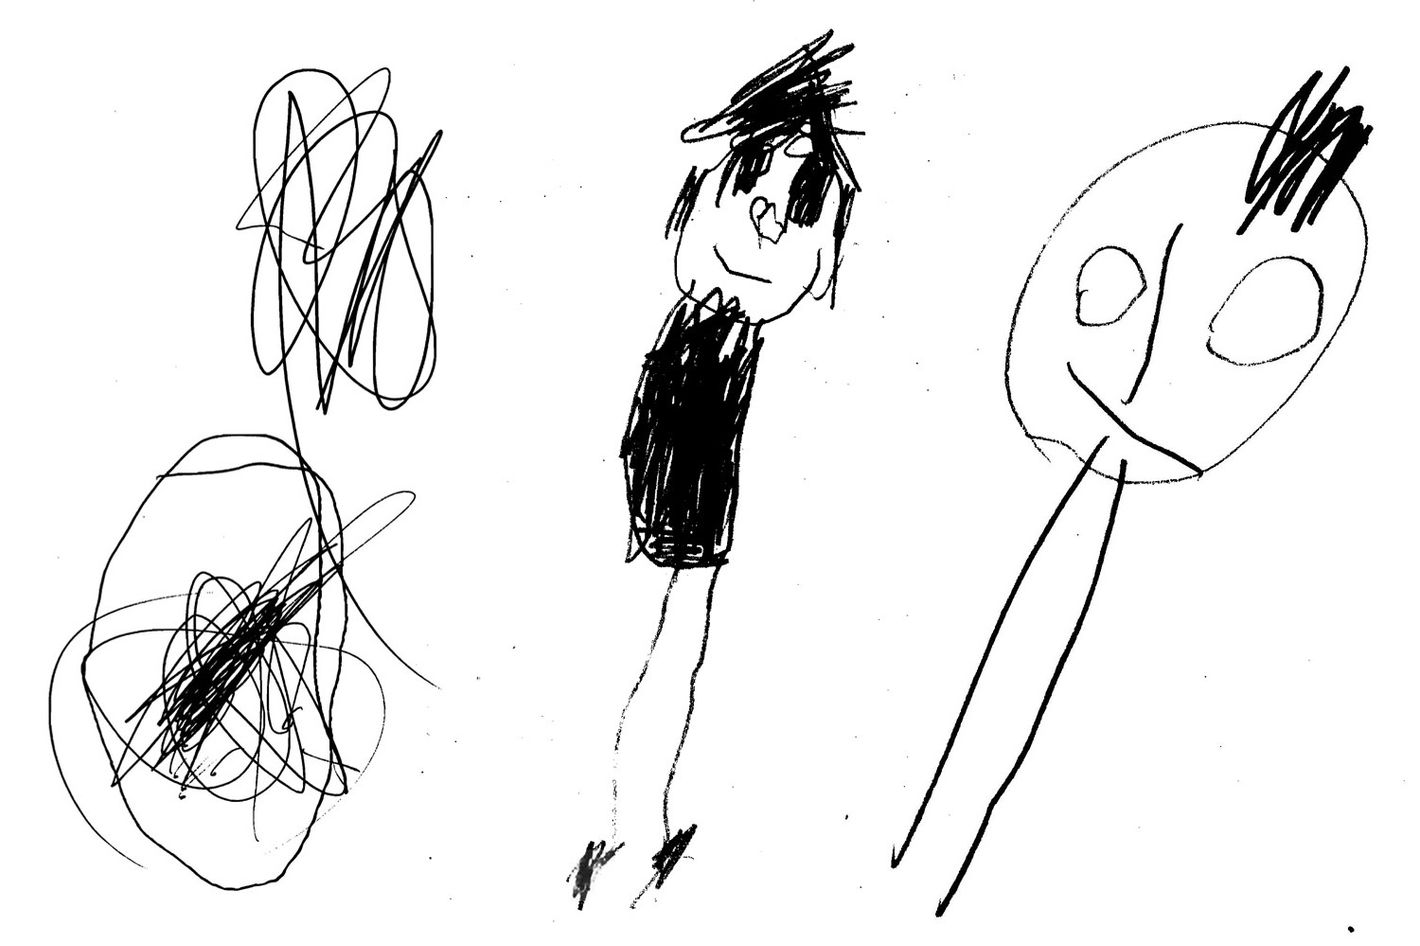 https://pyxis.nymag.com/v1/imgs/5a1/258/d53ca4c726eb9c184821d453ebf27e7383-19-childrens-drawings.2x.h473.w710.jpg